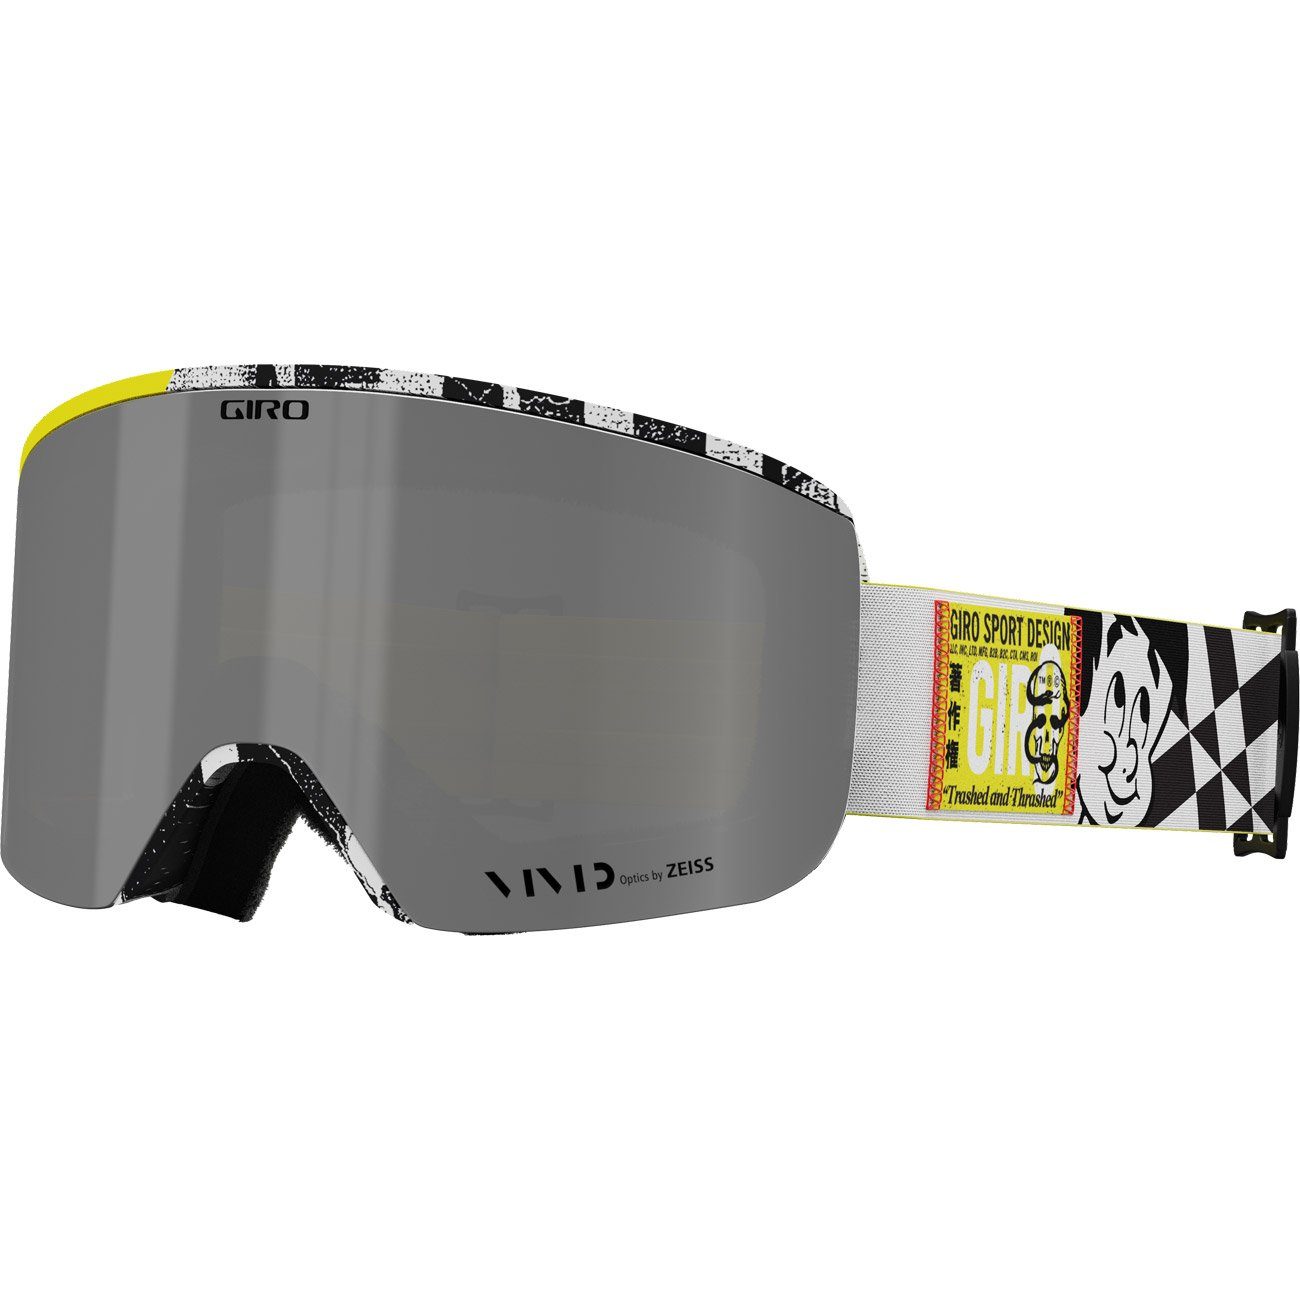 Giro Snowboardbrille, AXIS blk/wht trashed viv onyx/infra